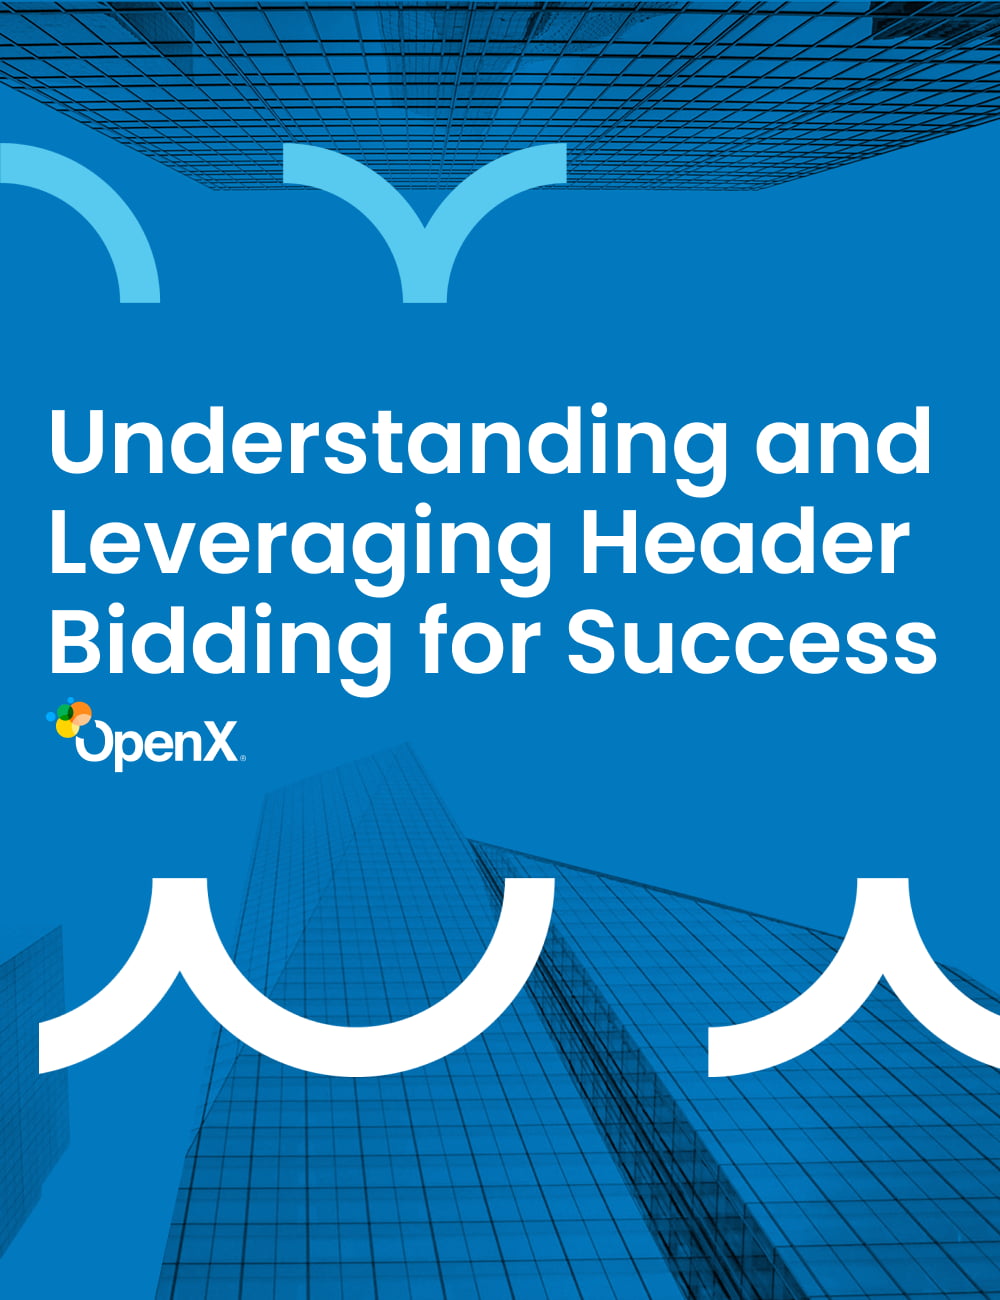 openx-understanding-and-leveraging-header-bidding-for-success